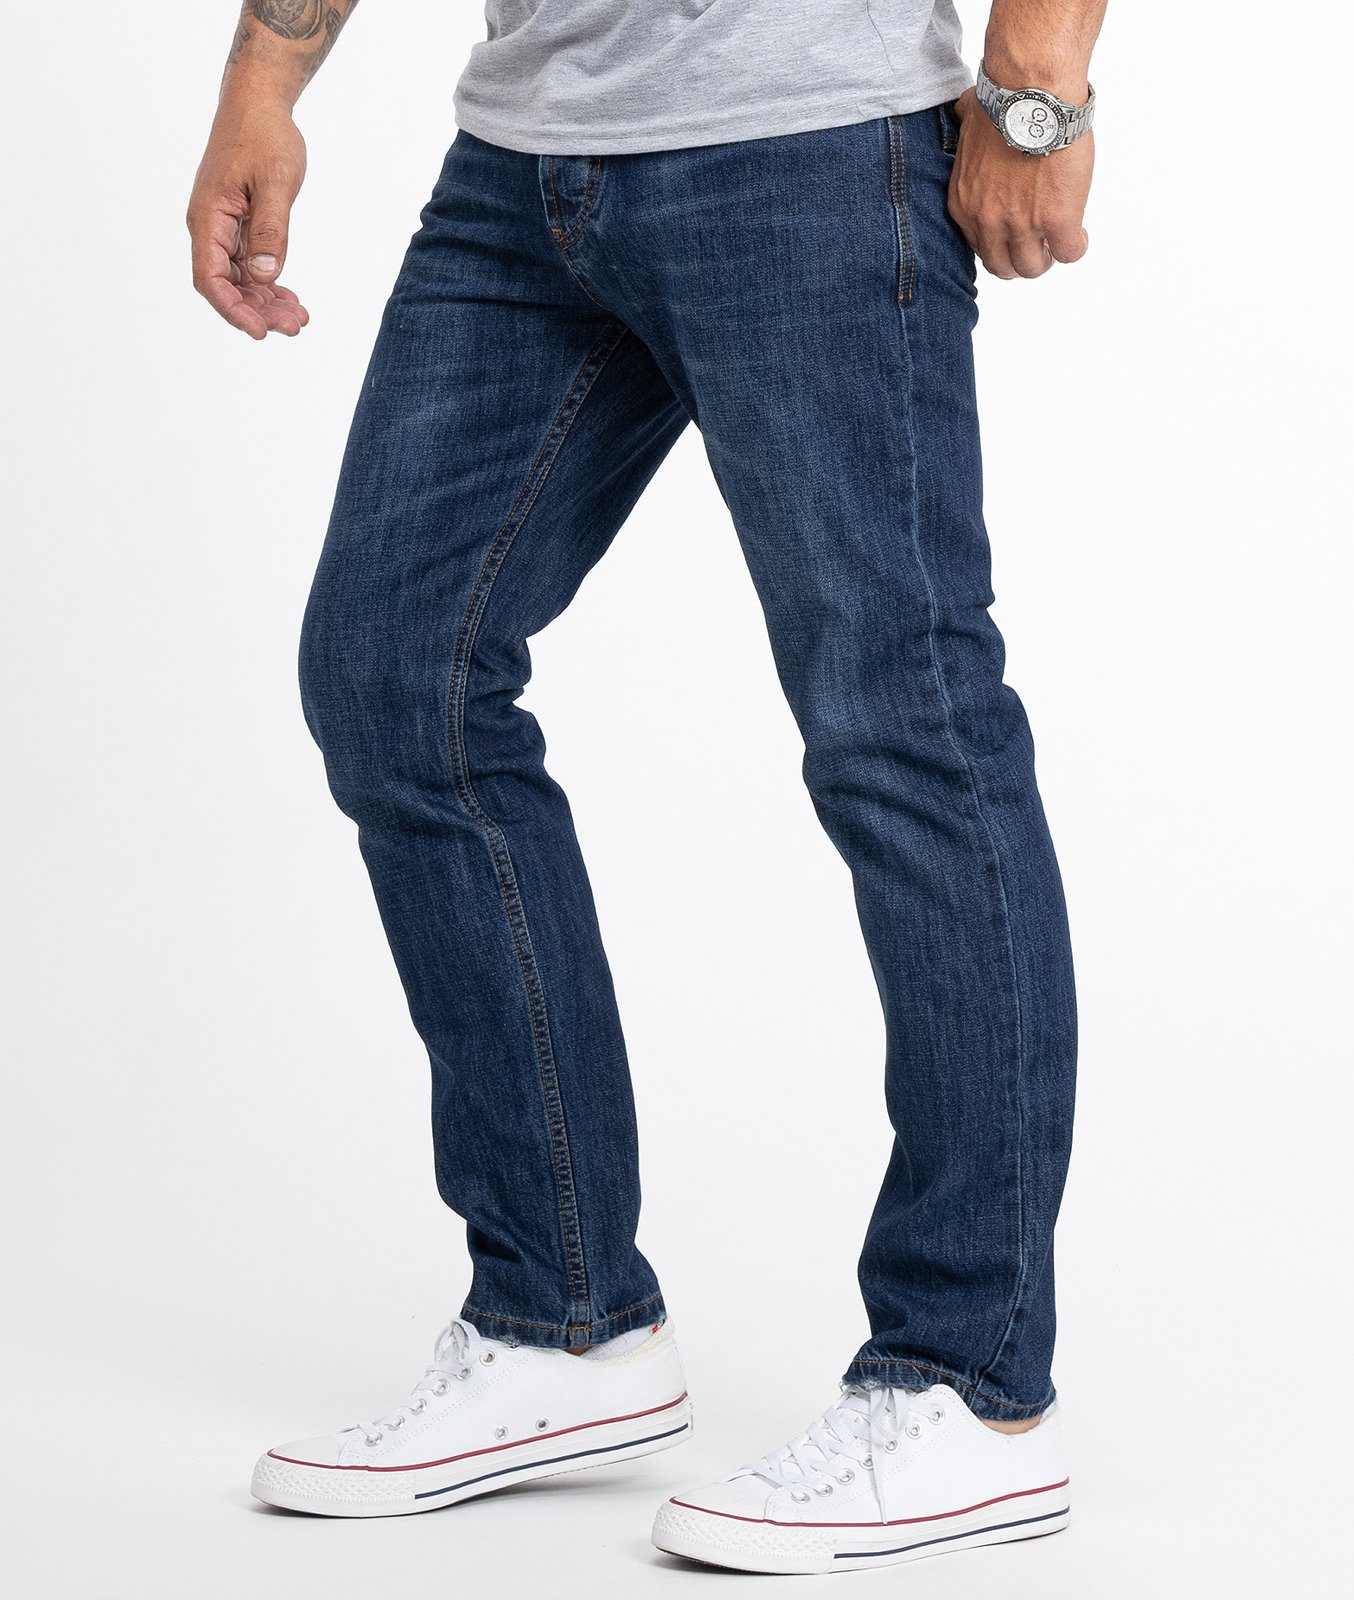 Lorenzo Jeans LL-324 Herren Loren Straight-Jeans Fit Regular Blau